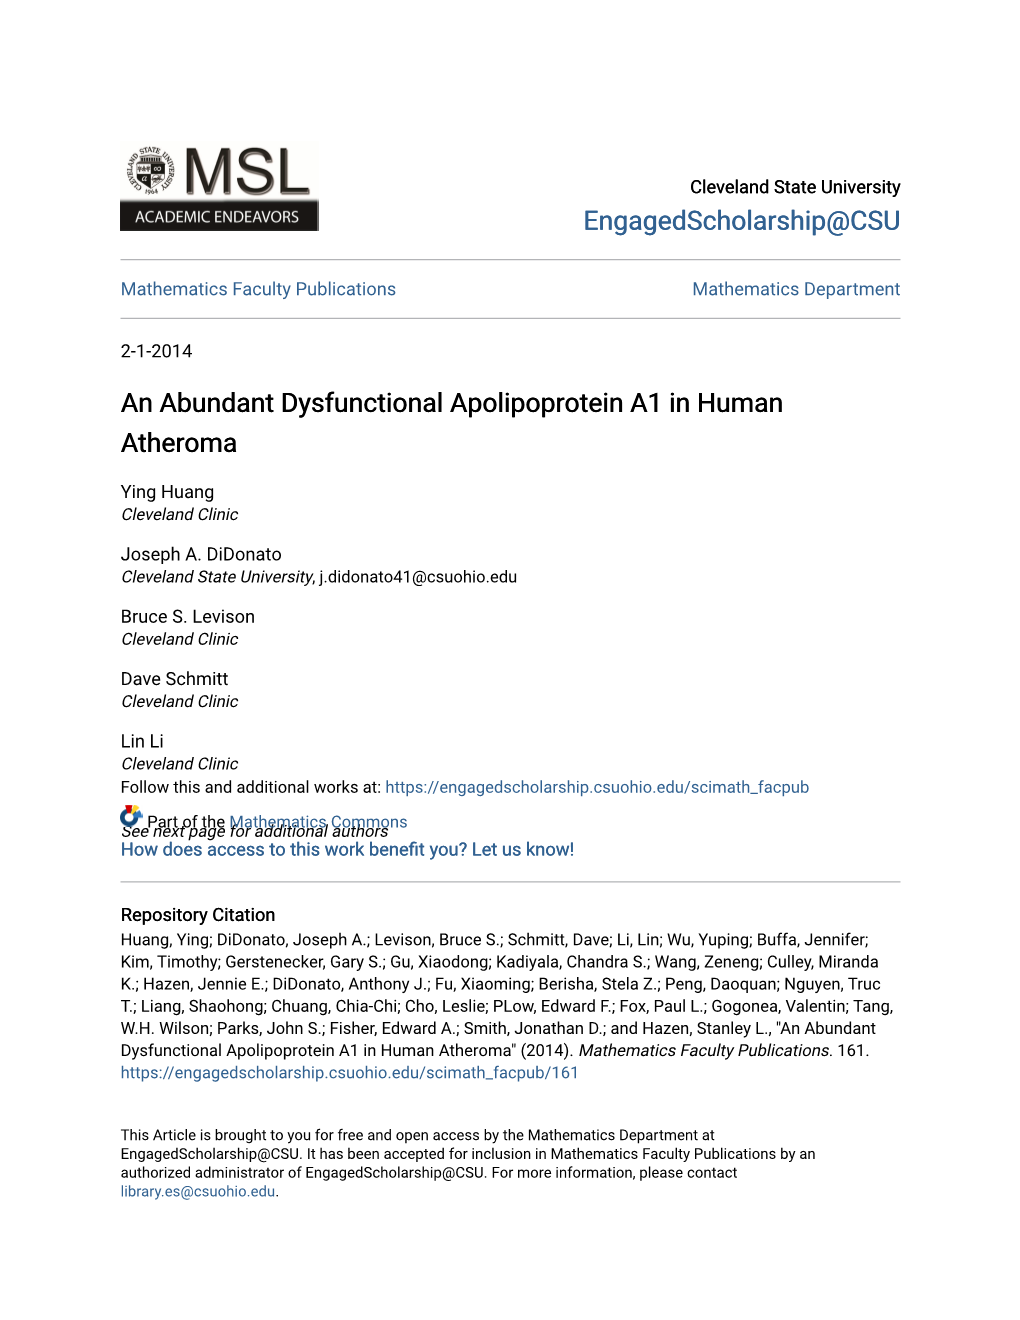 An Abundant Dysfunctional Apolipoprotein A1 in Human Atheroma